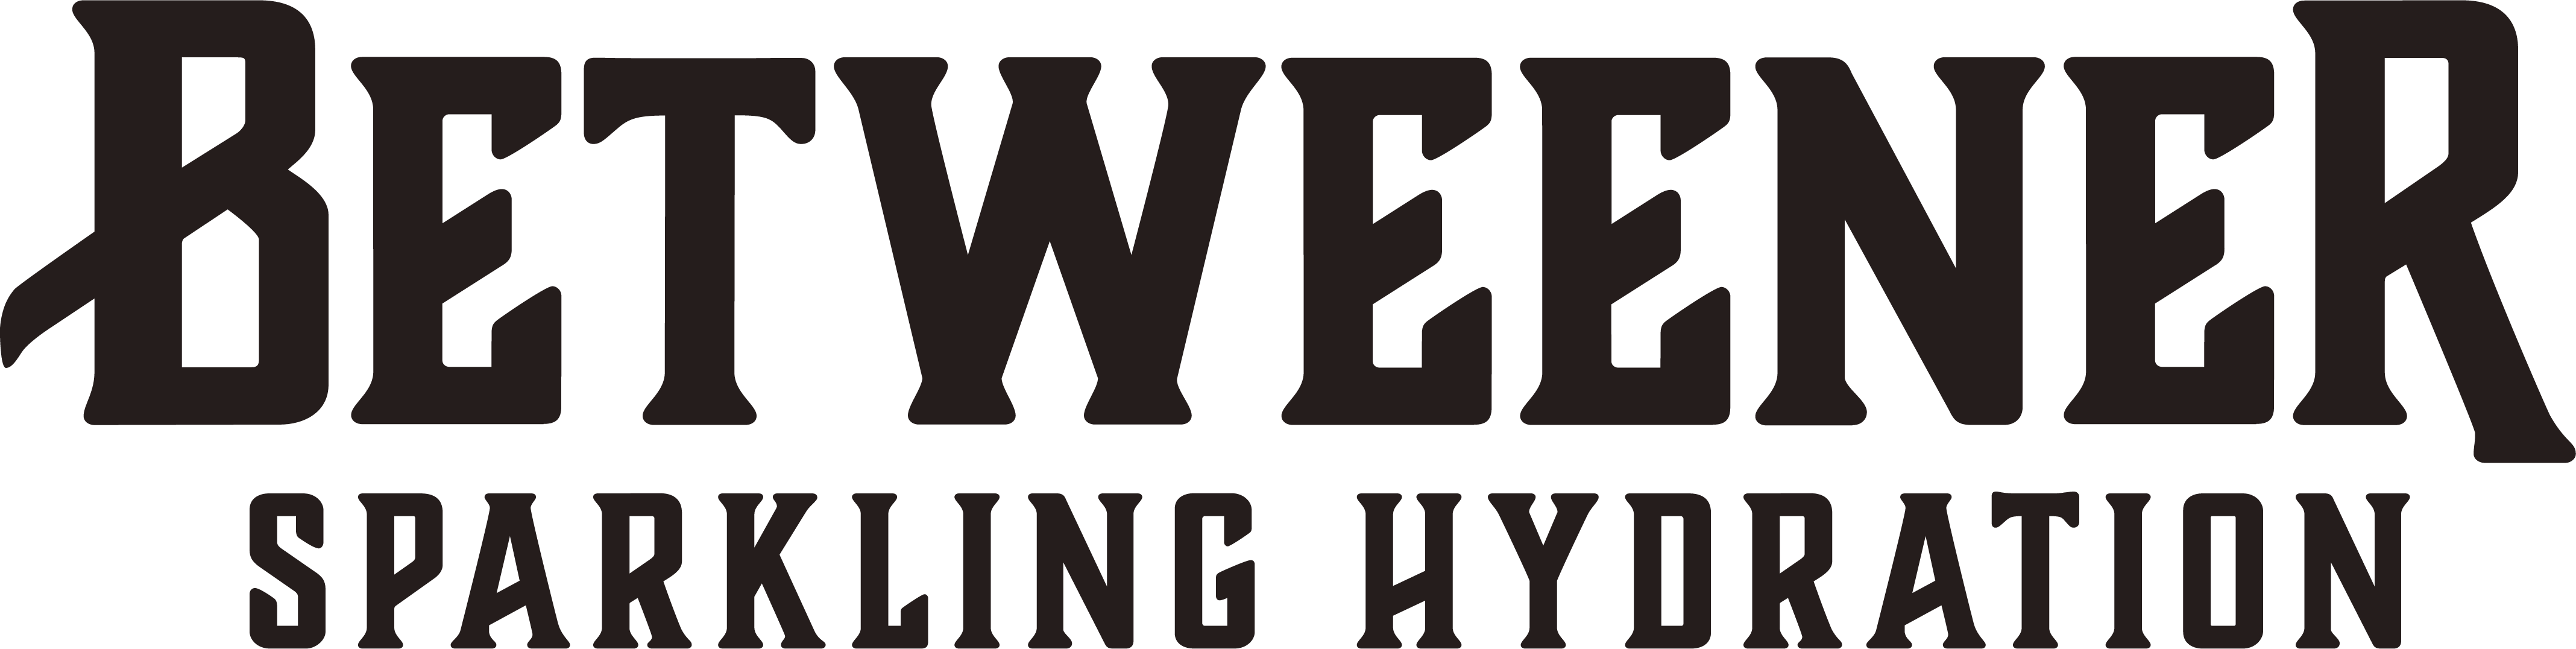 Betweener Sparkling Hydration logo